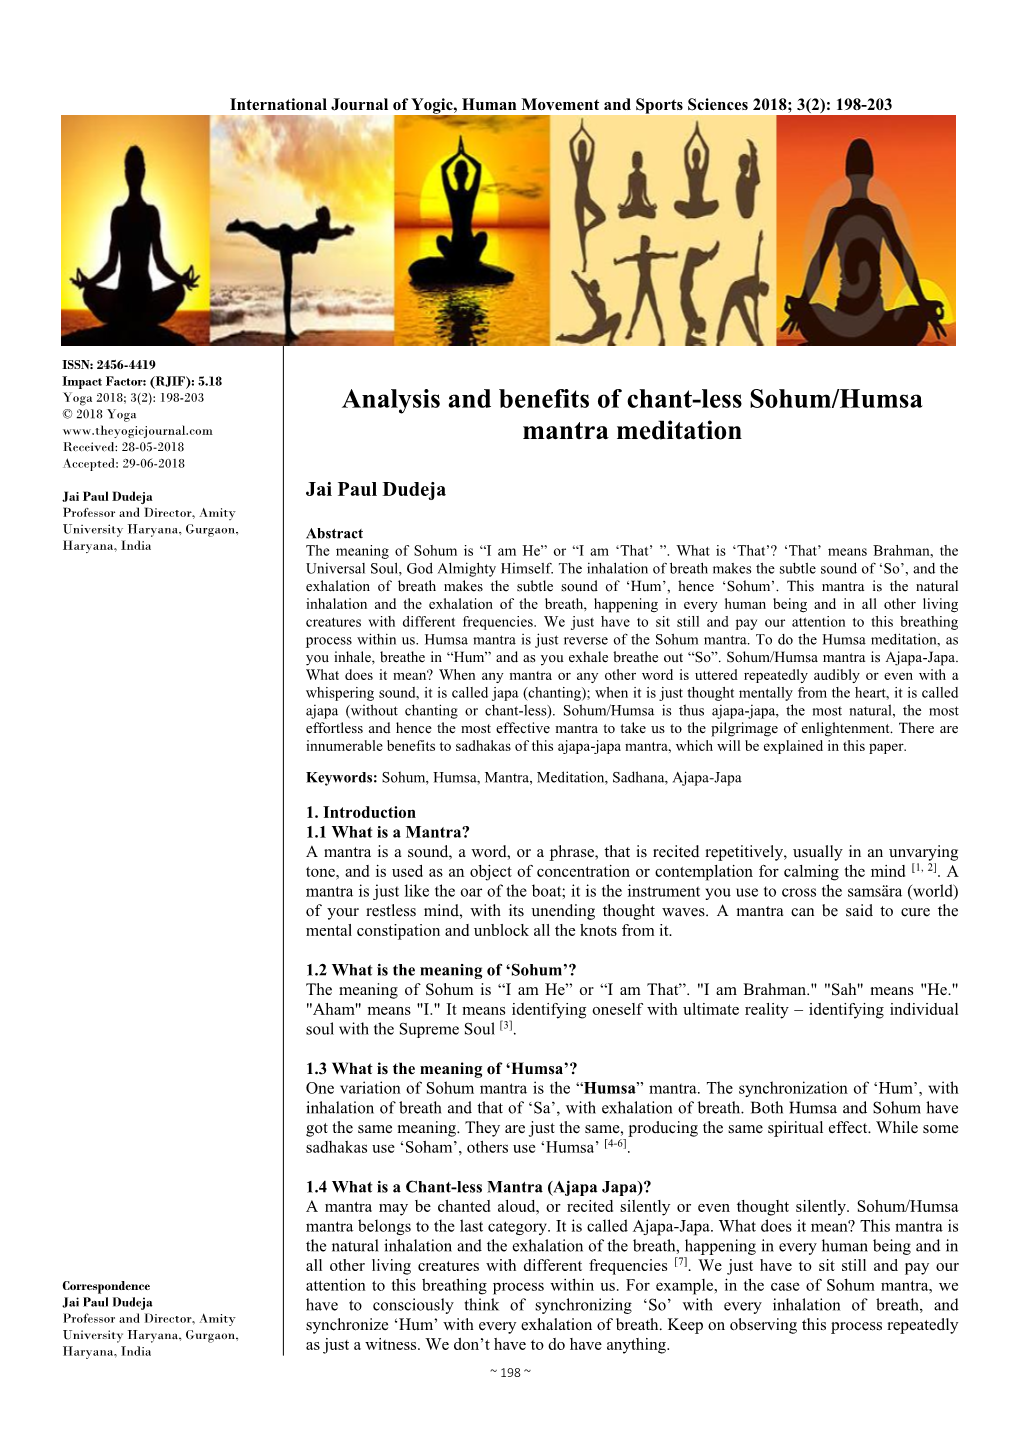 Analysis and Benefits of Chant-Less Sohum/Humsa Mantra Meditation